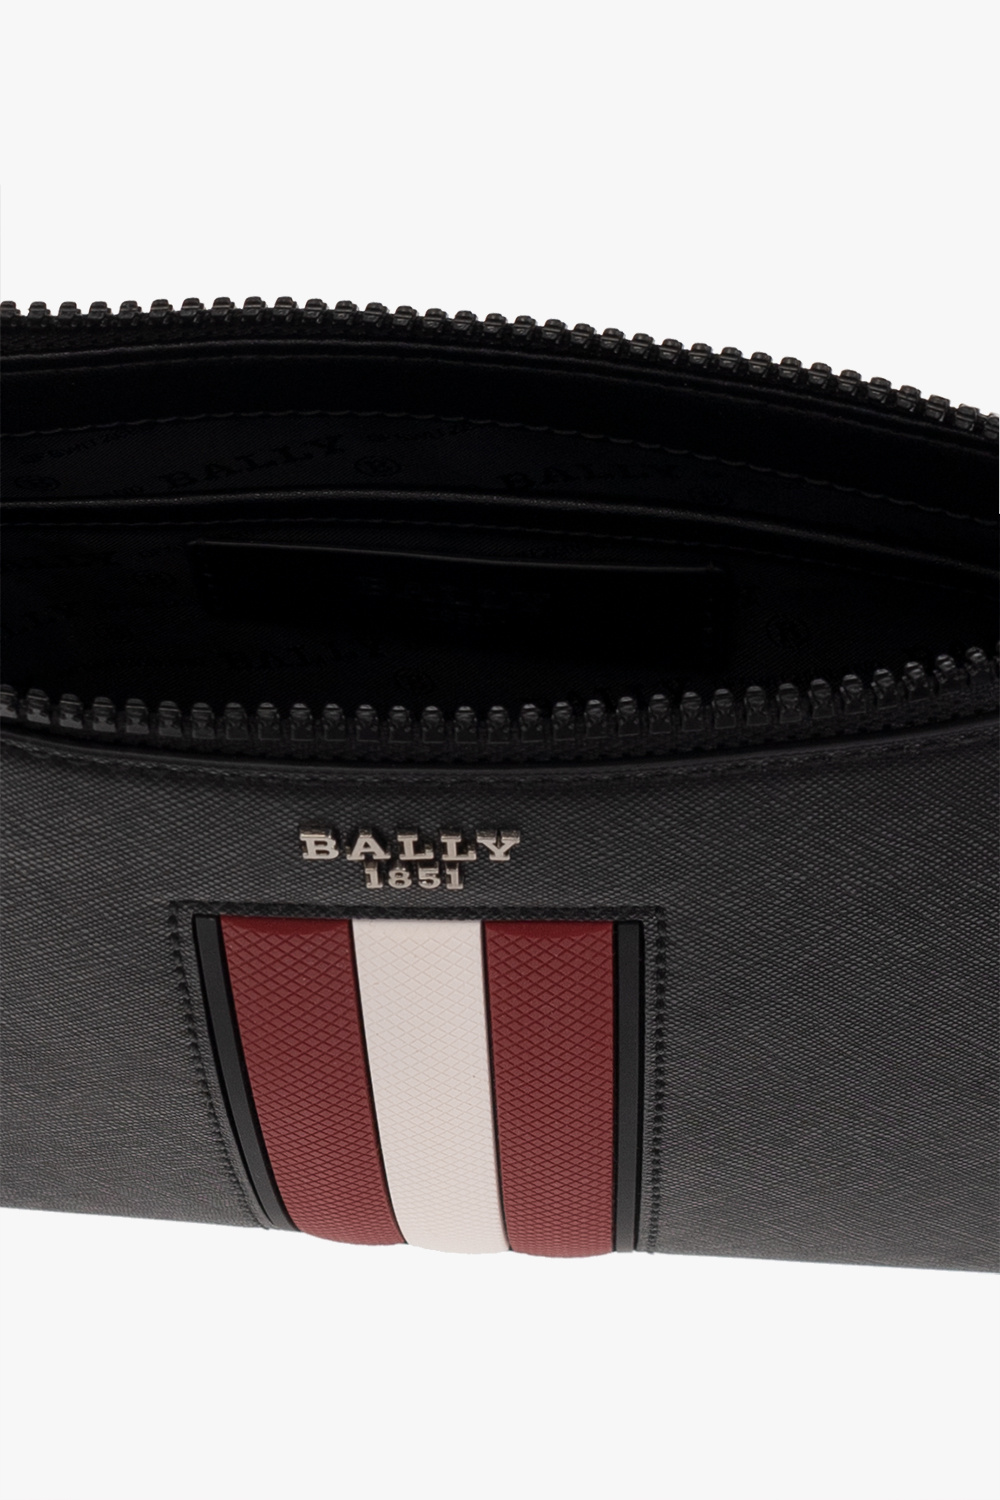 Bally ‘Makid’ leather handbag